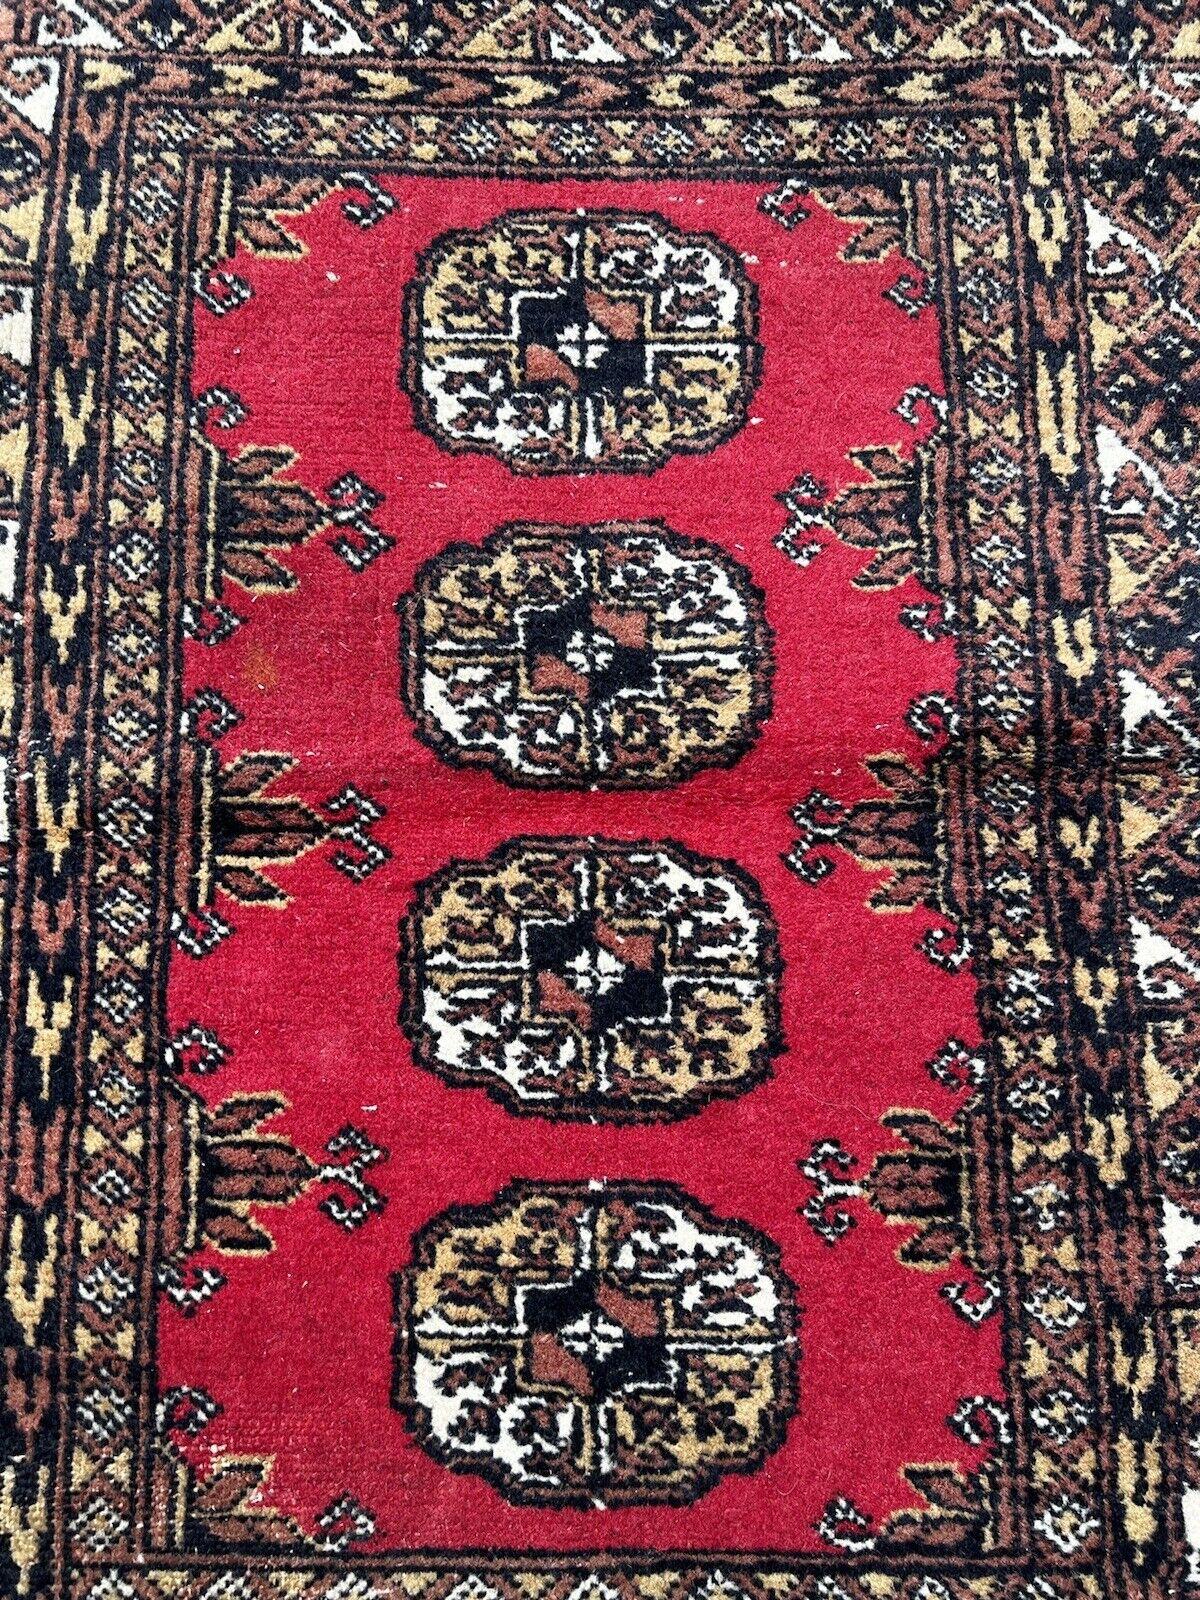 Handmade Vintage Uzbek Bukhara Rug 2.1' x 3', 1960s - 1S25 For Sale 1